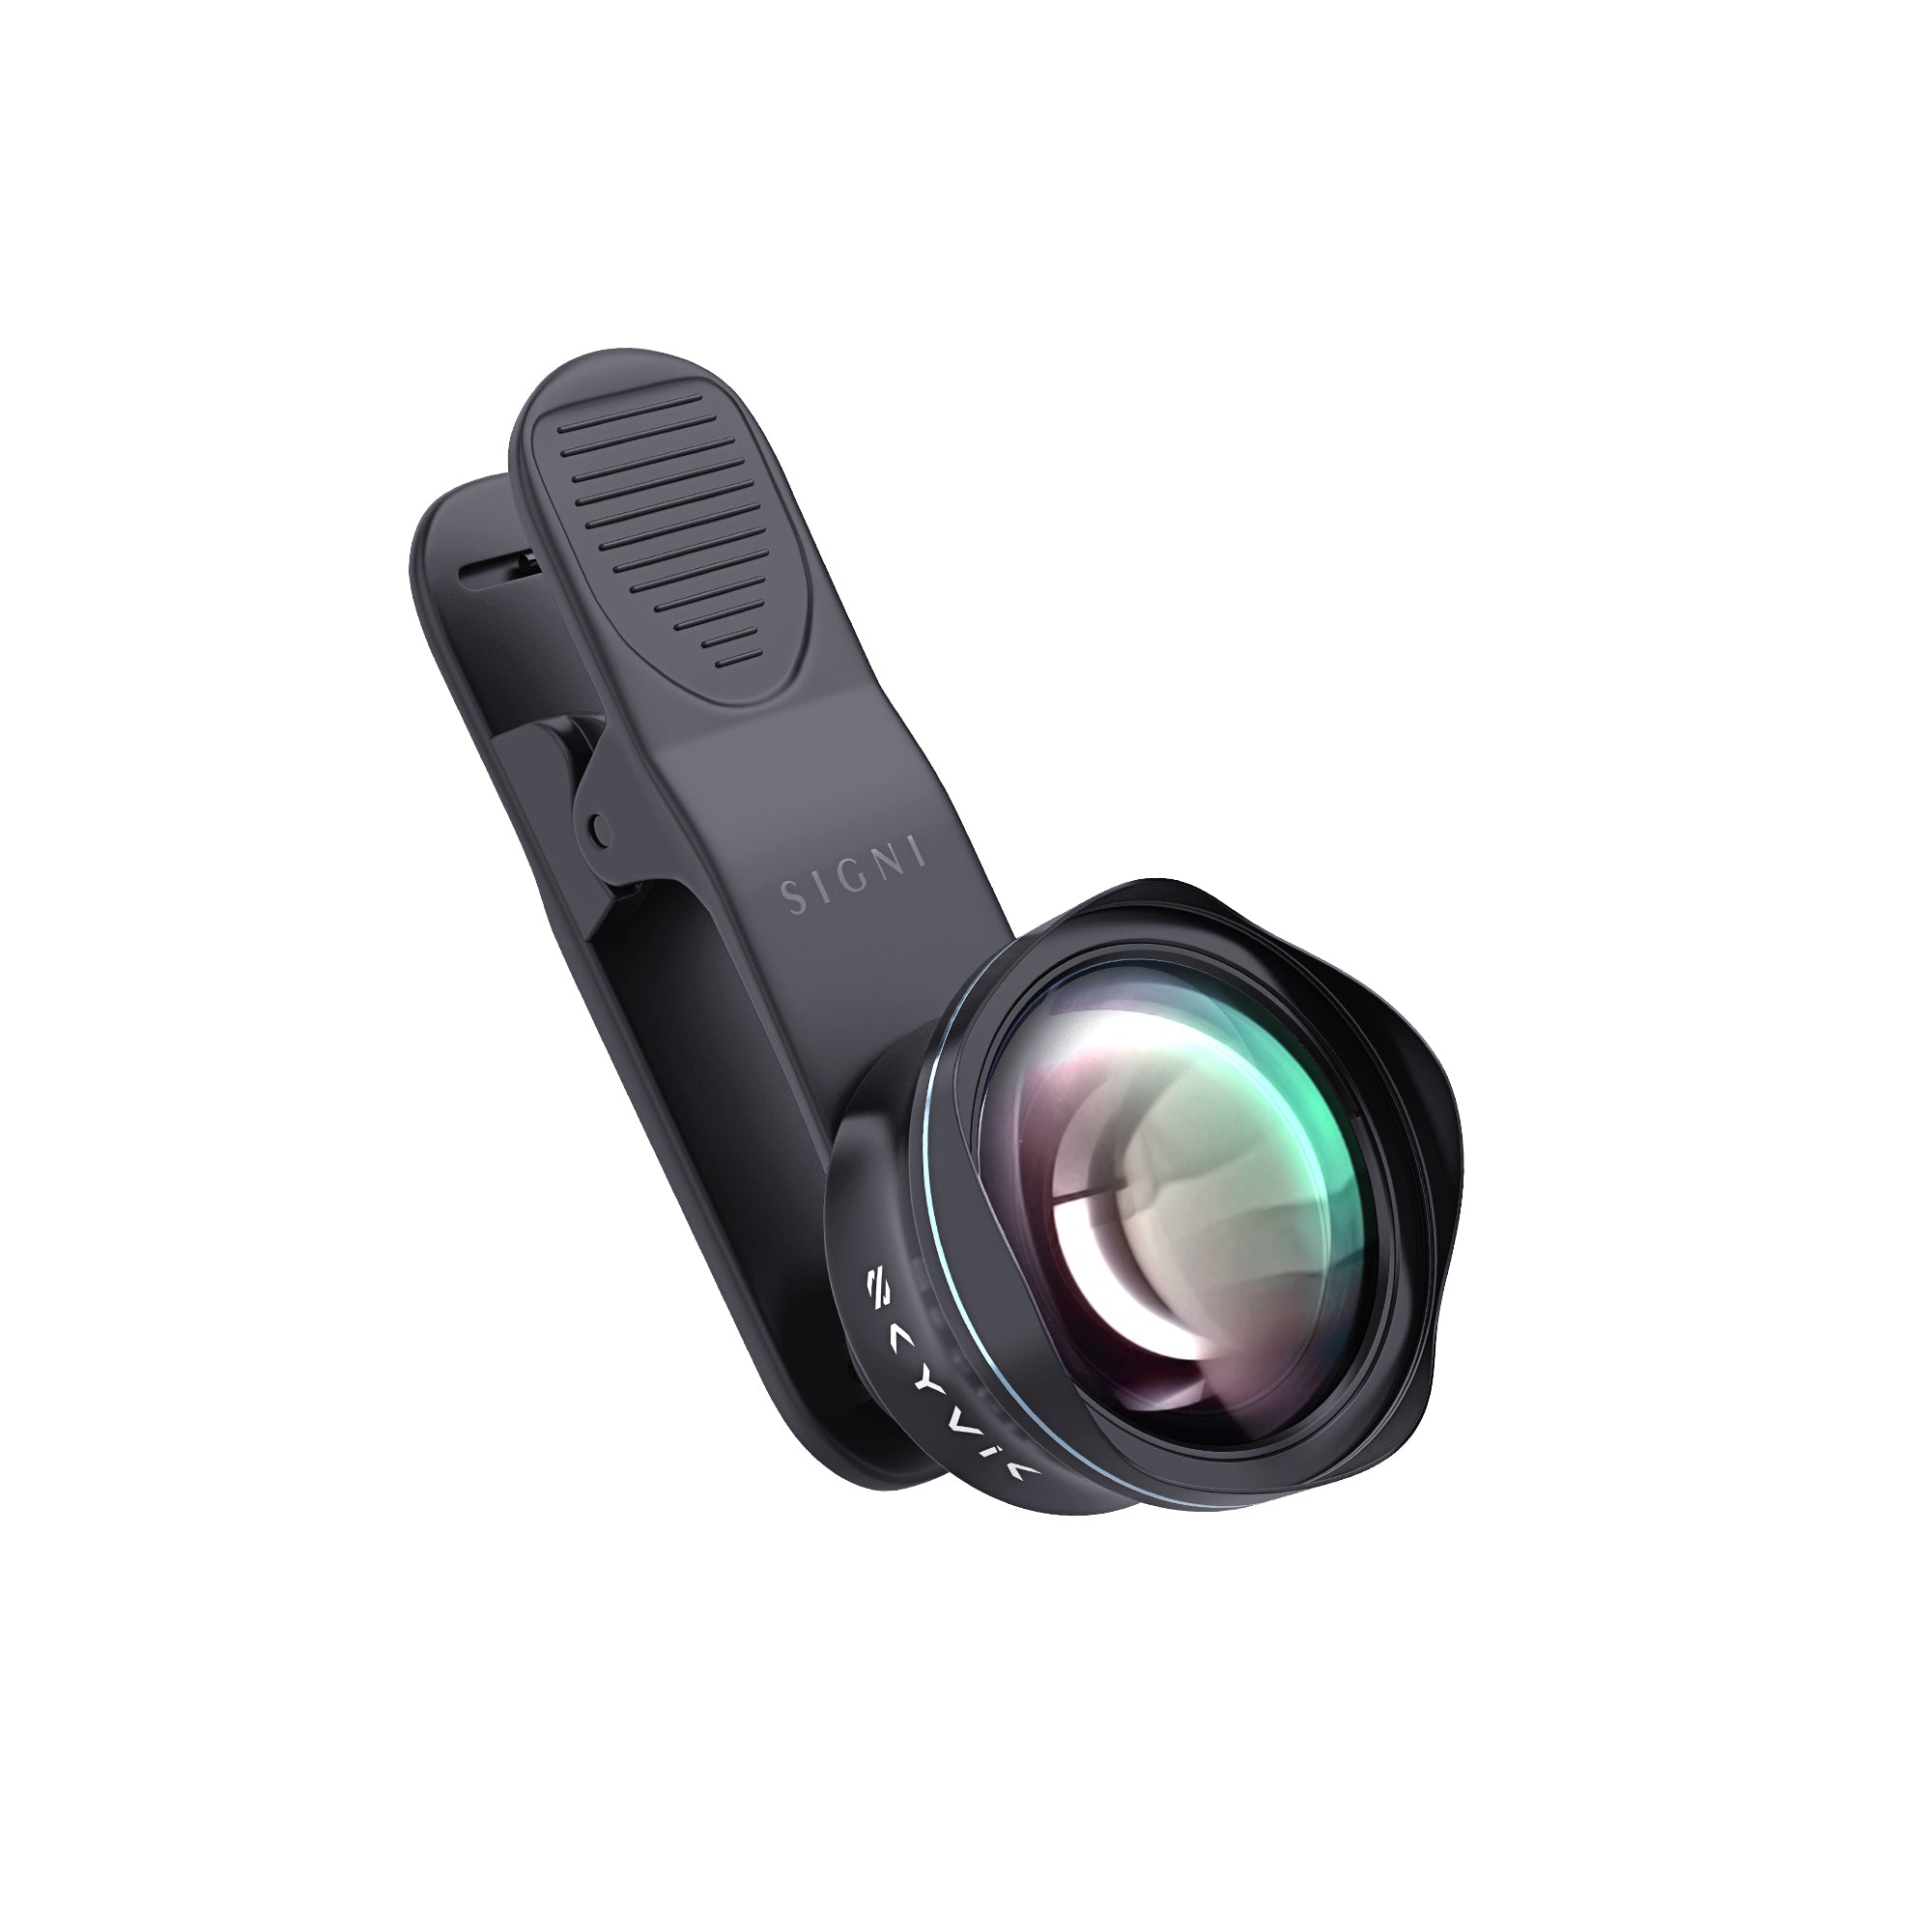 SIGNI One 60mm Telephoto Lens